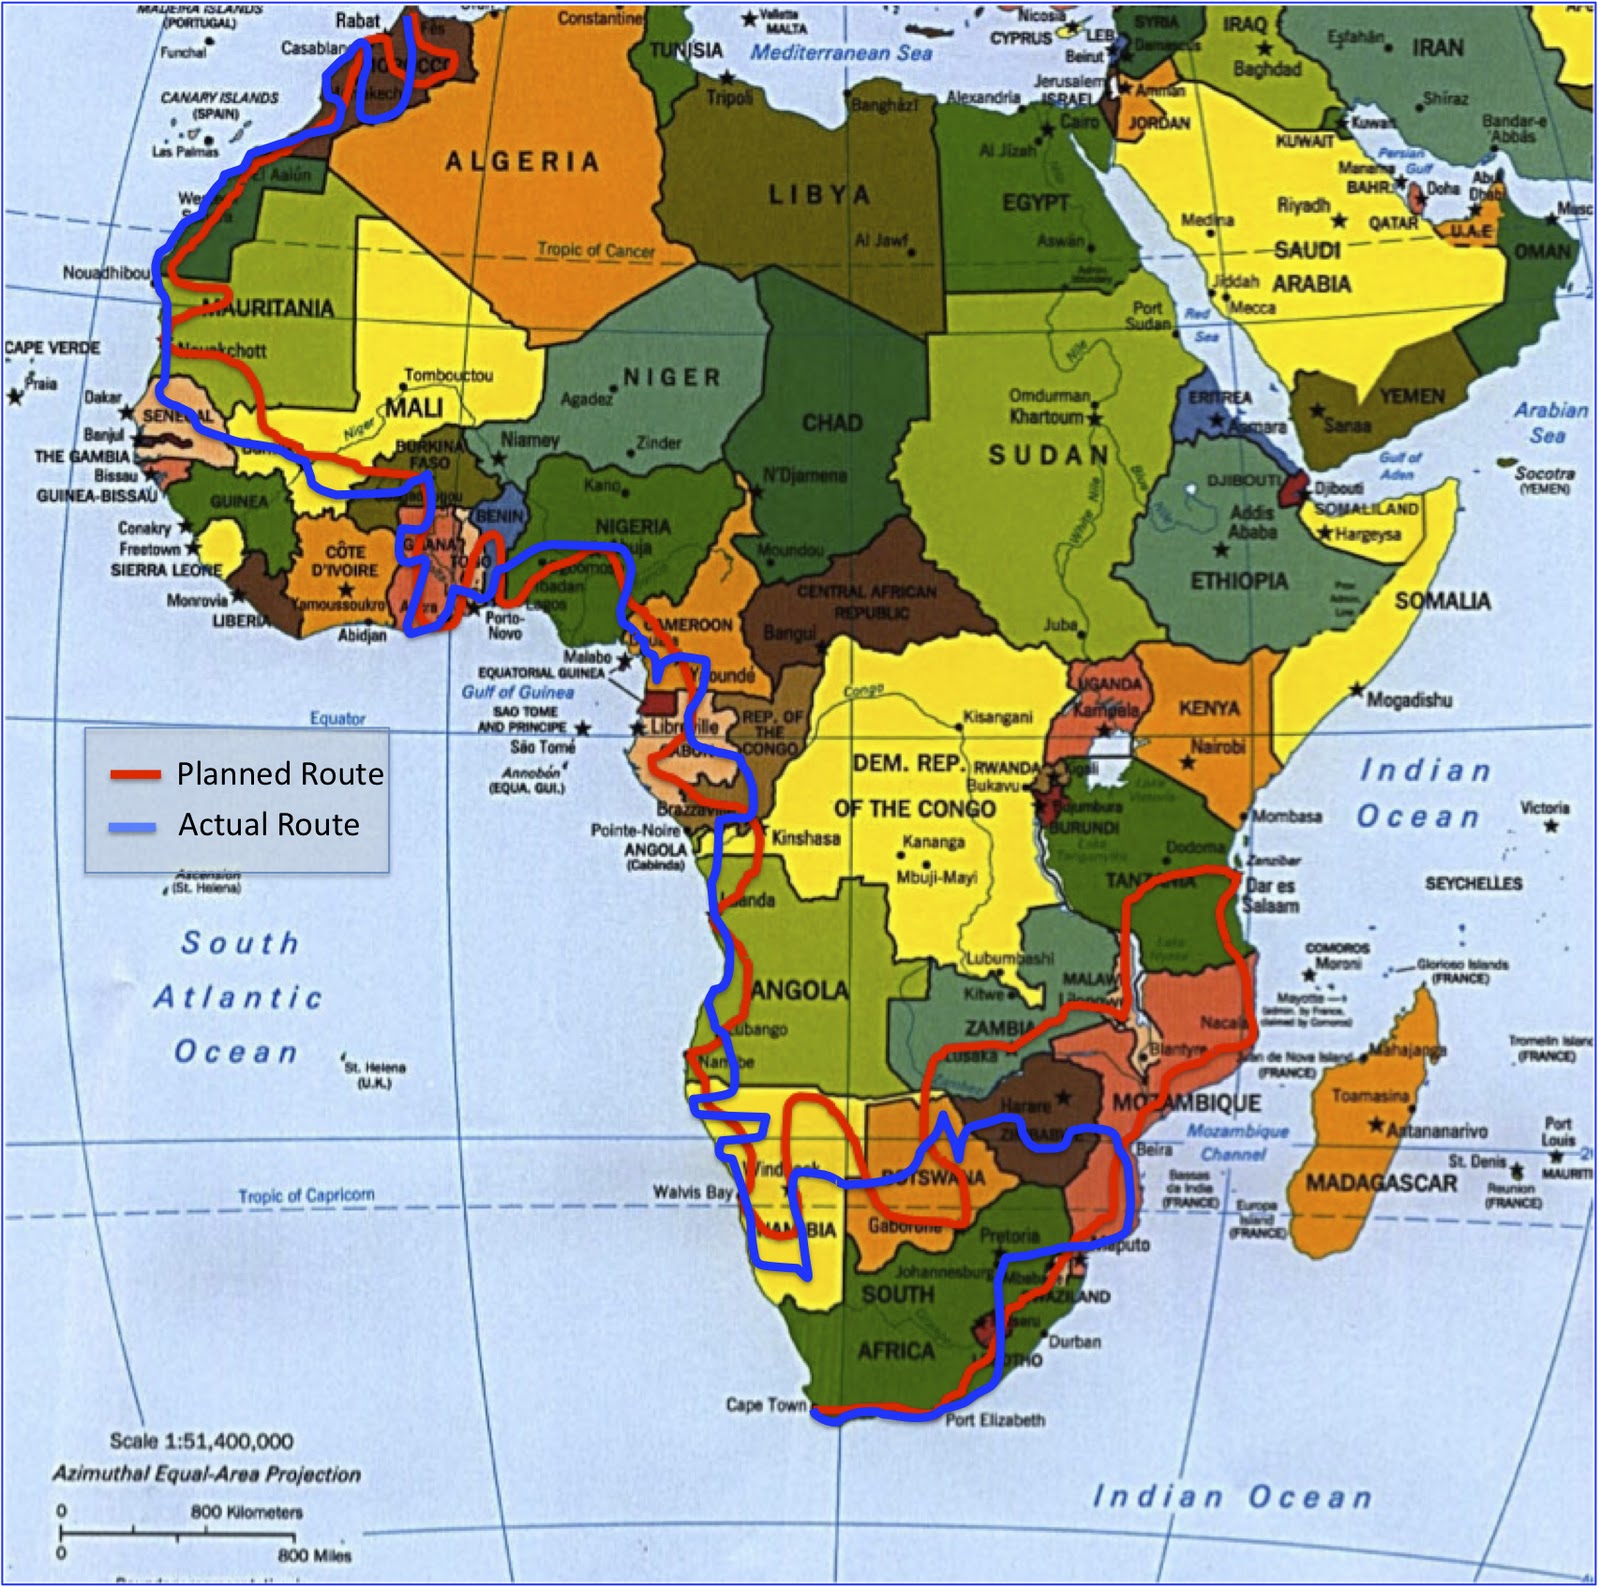 file-africa-ethnic-groups-1996-jpg-wikimedia-commons